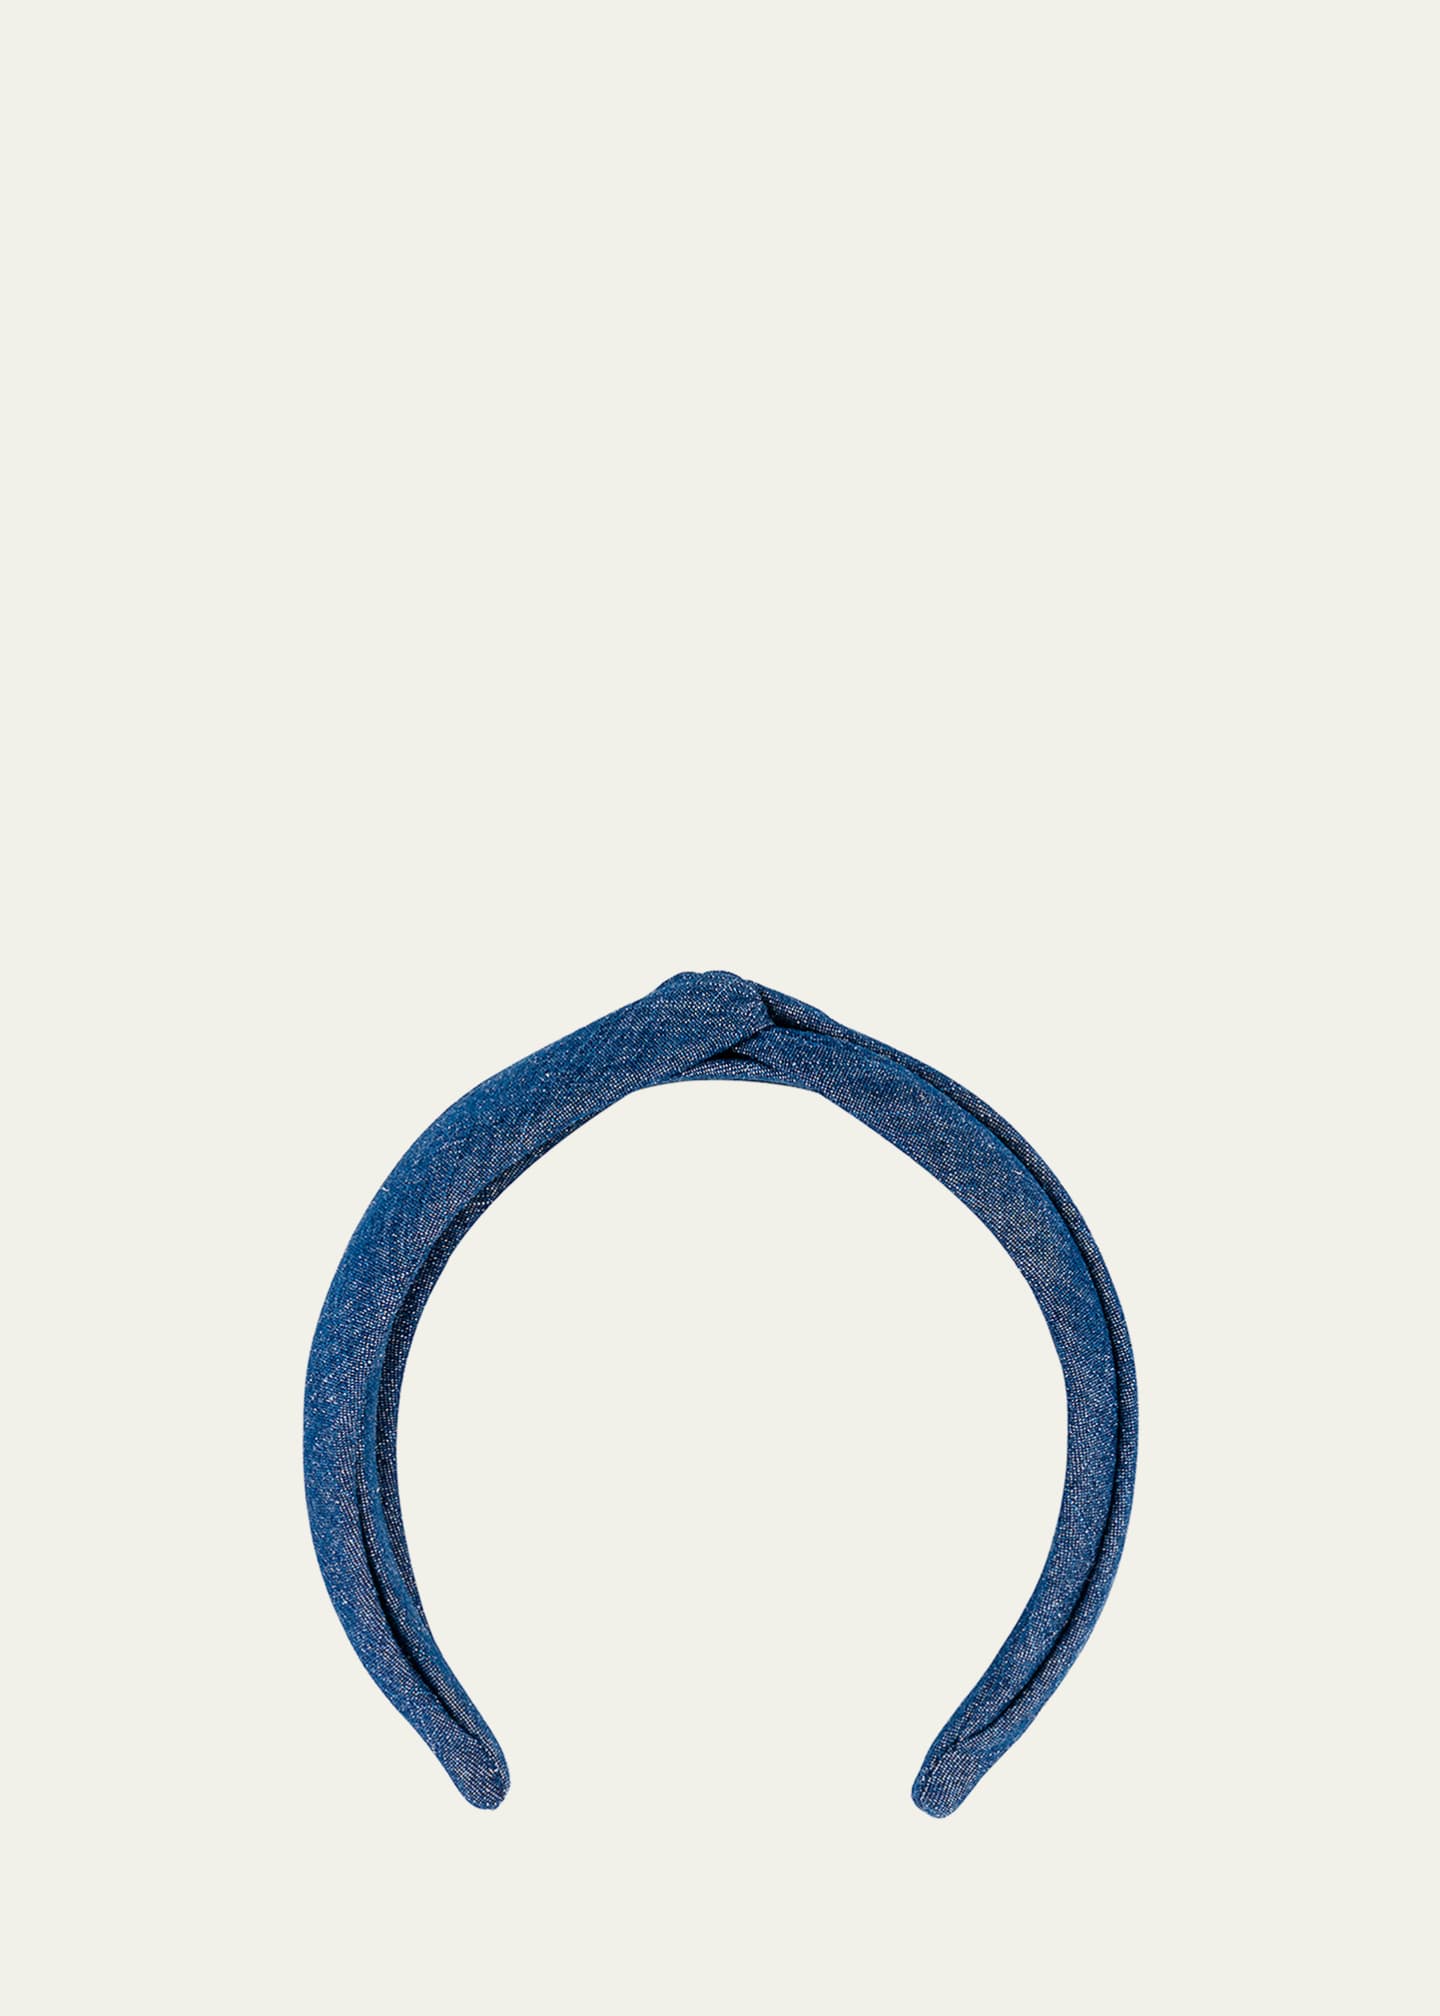 Alexandre de Paris Denim Knot Headband - Bergdorf Goodman